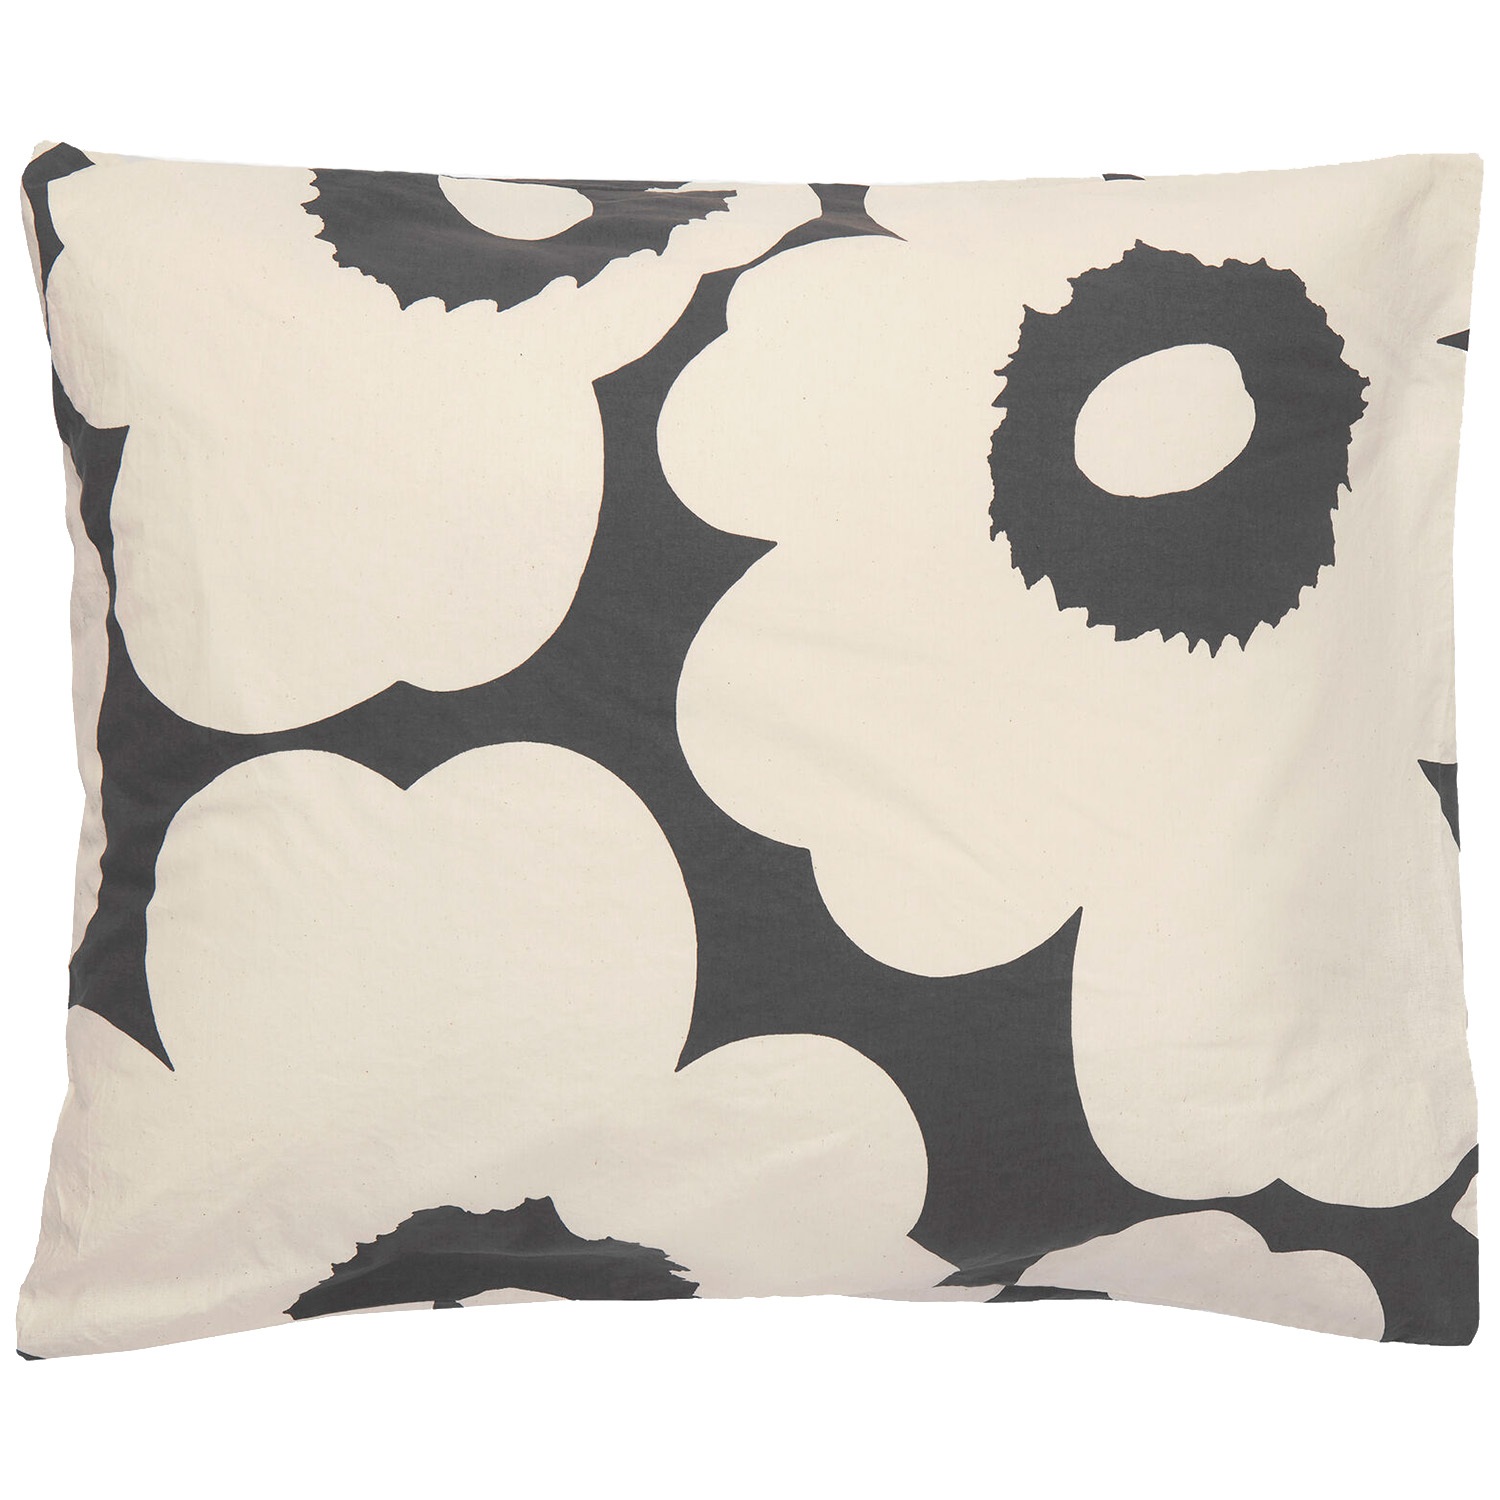 Unikko Pillowcase 50x60 cm, Off-white/Charcoal - Marimekko @ RoyalDesign